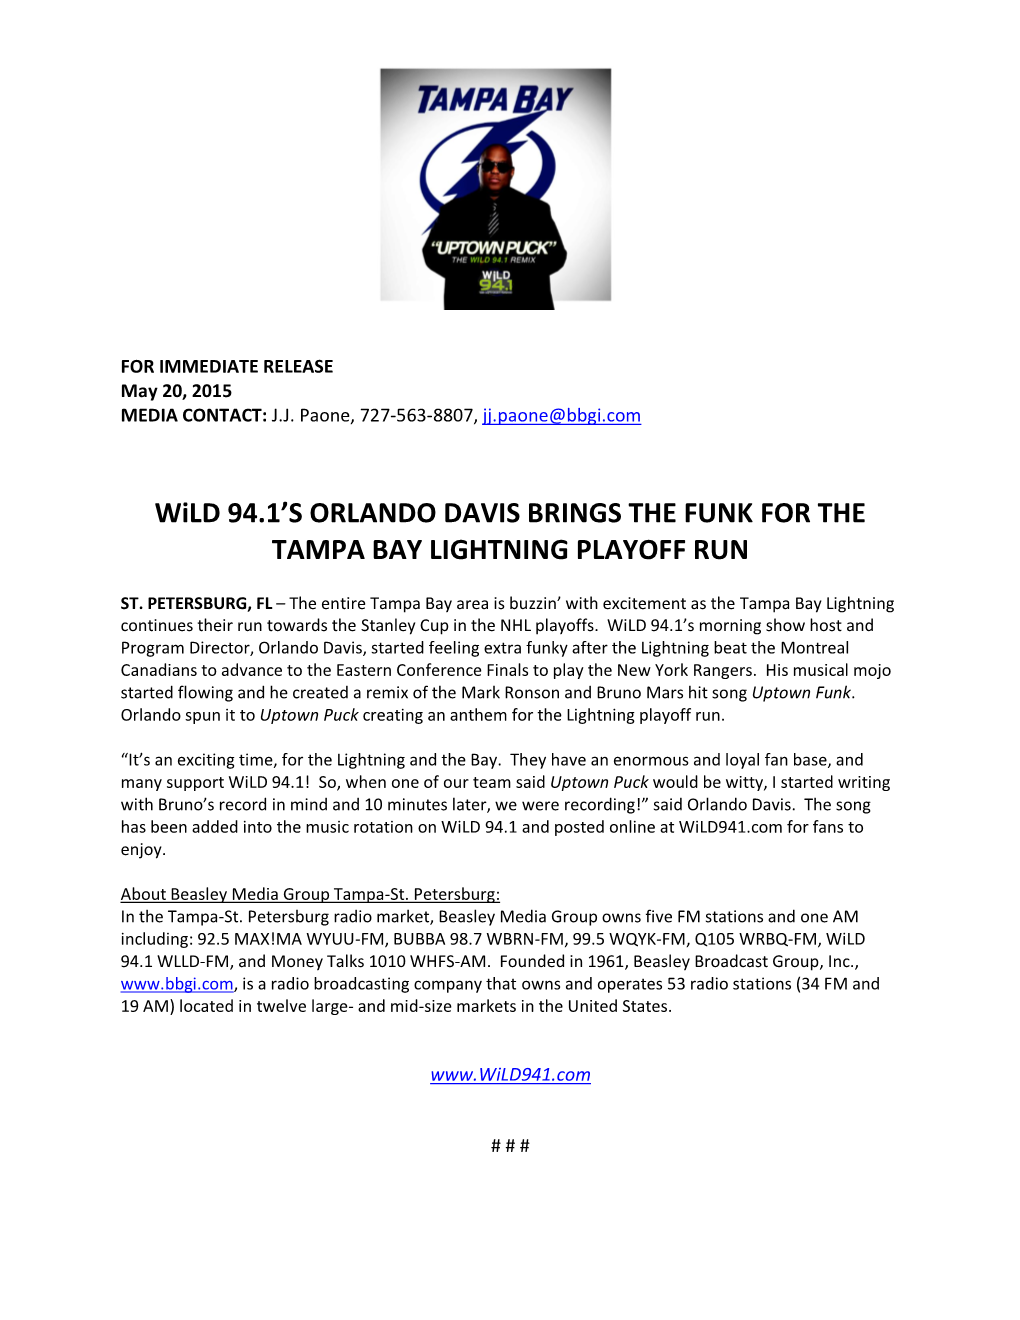 Wild 94.1'S ORLANDO DAVIS BRINGS the FUNK for THE